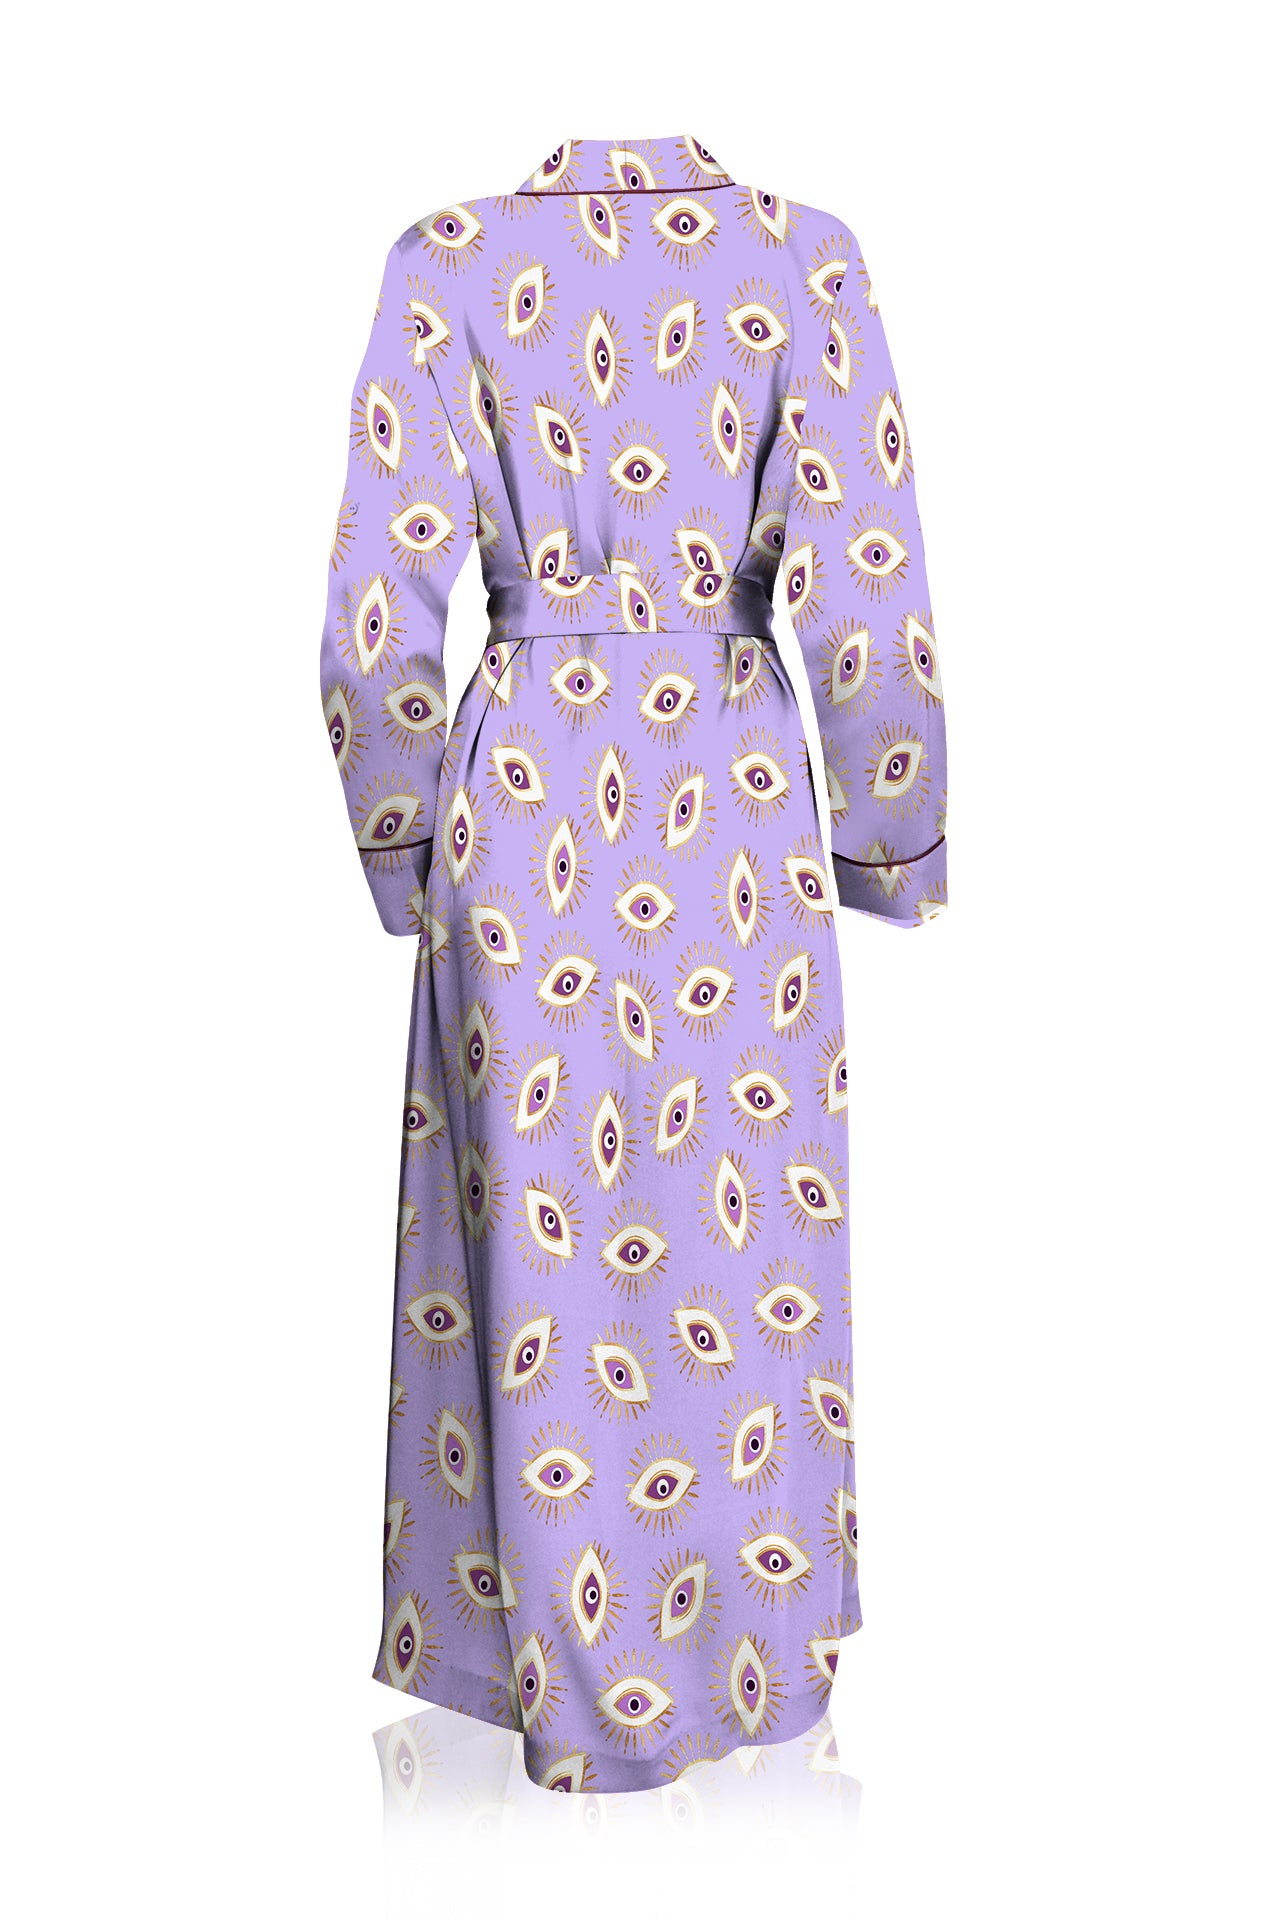 "silk lavender robe" "kimonos for women" "kim ono silk robe" "Kyle X Shahida"